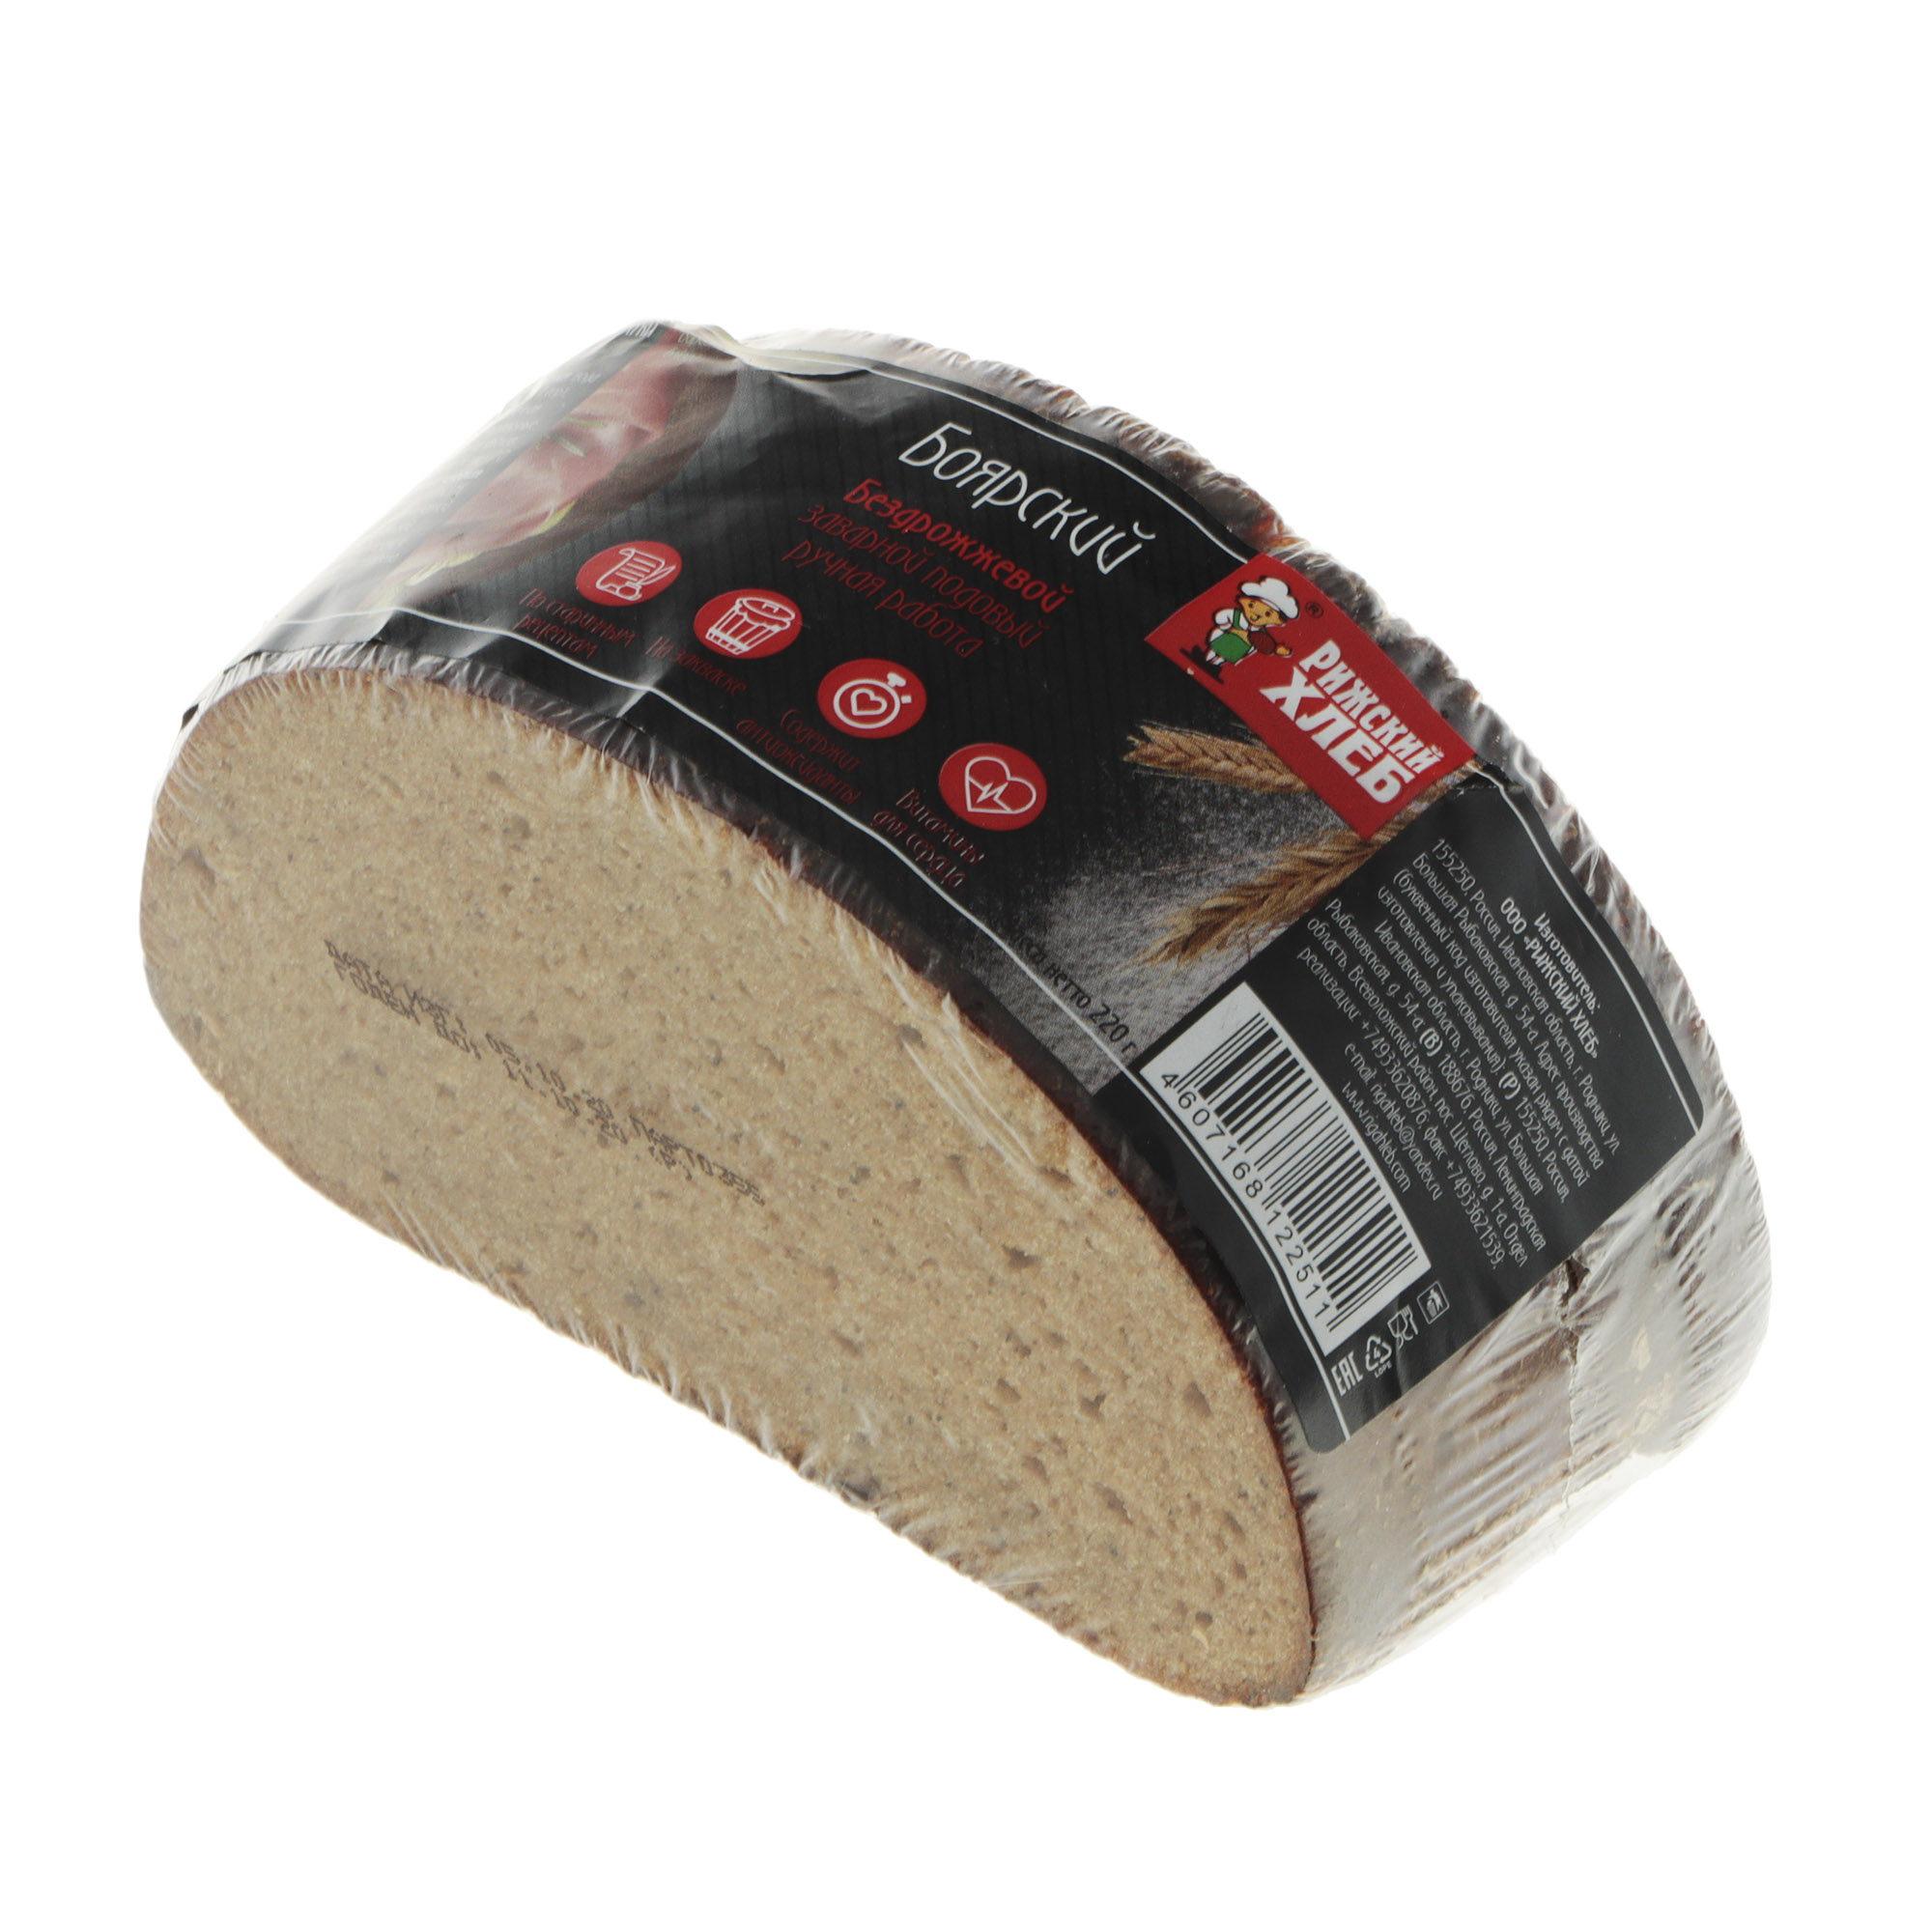 Хлеб Рижский хлеб боярский 220 г хлеб щелковохлеб боярский нарезка 340 г